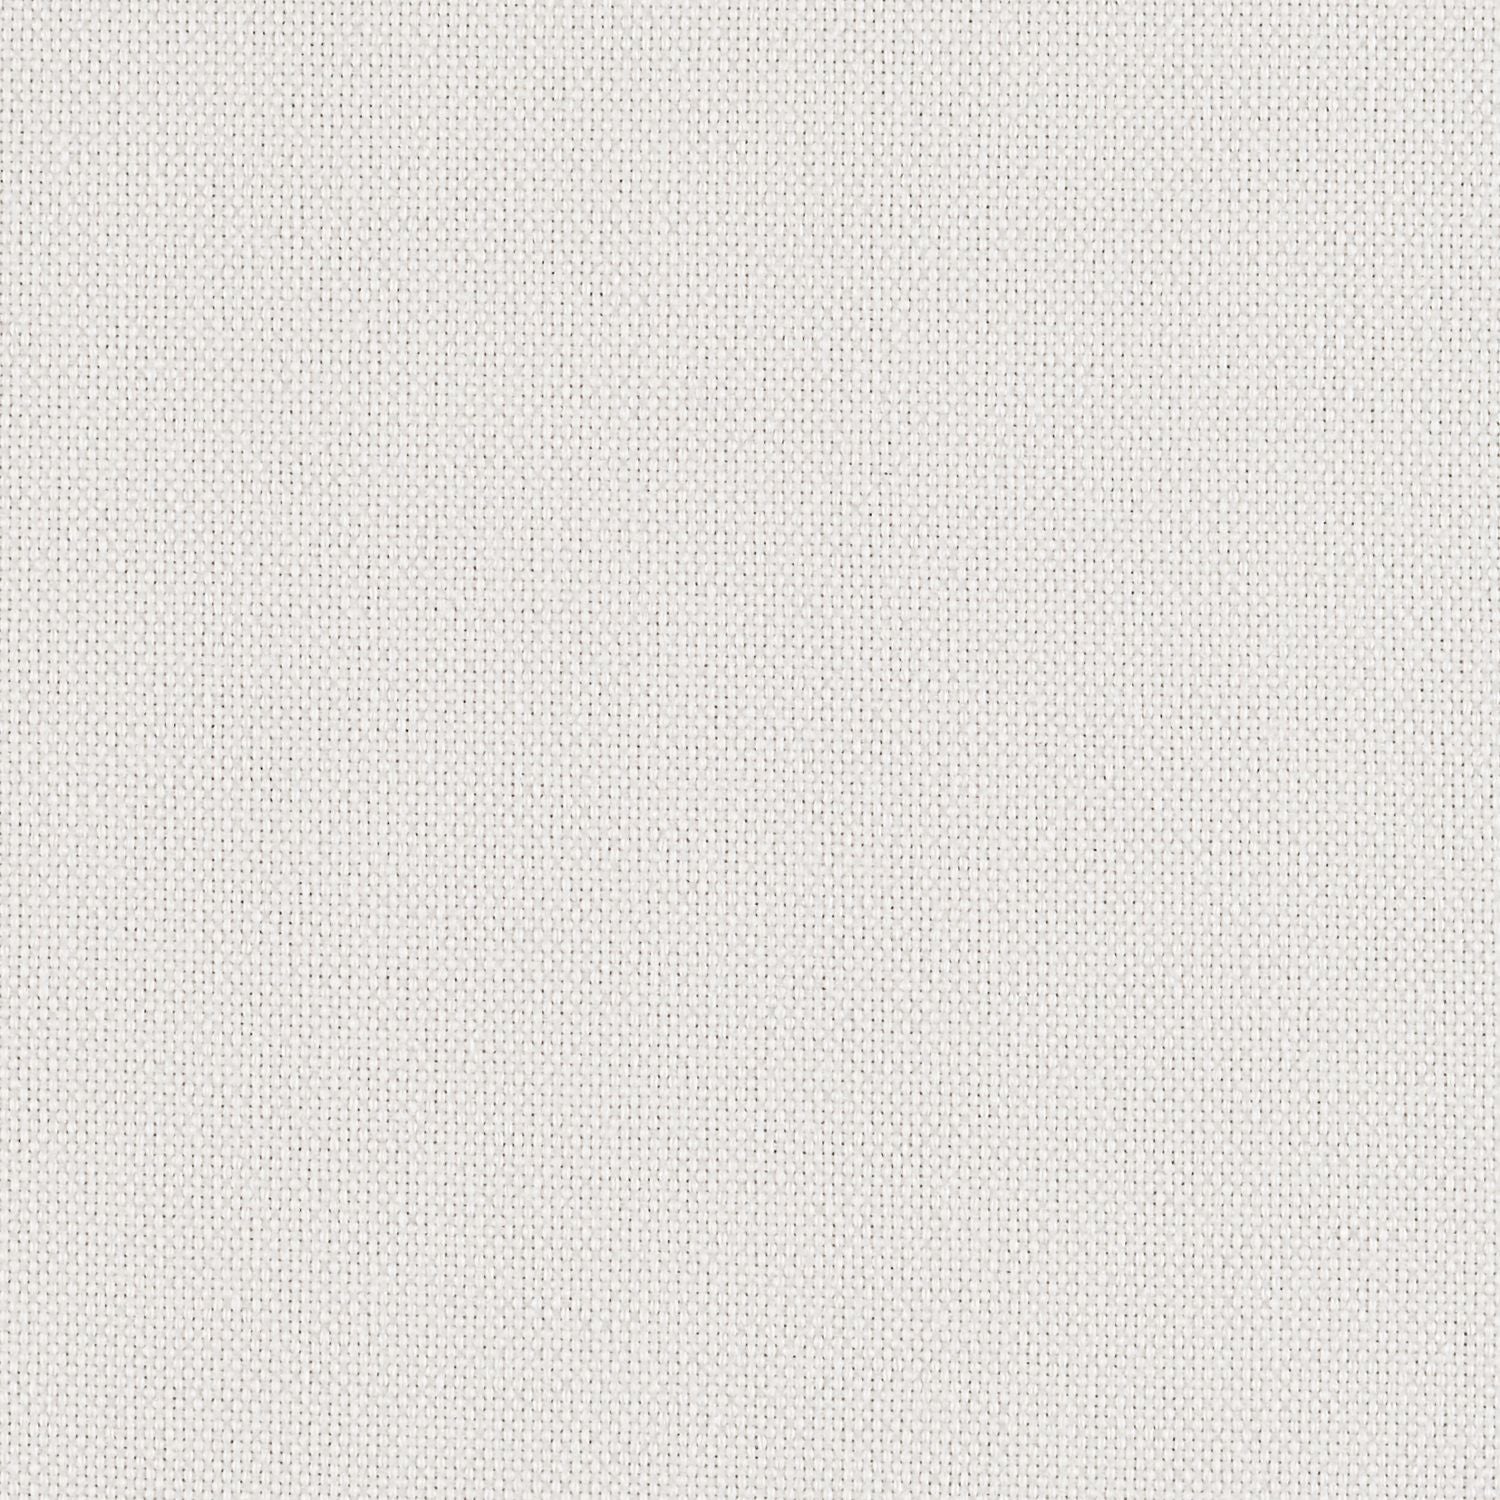 Backdrop - White Out - 1027 - 01